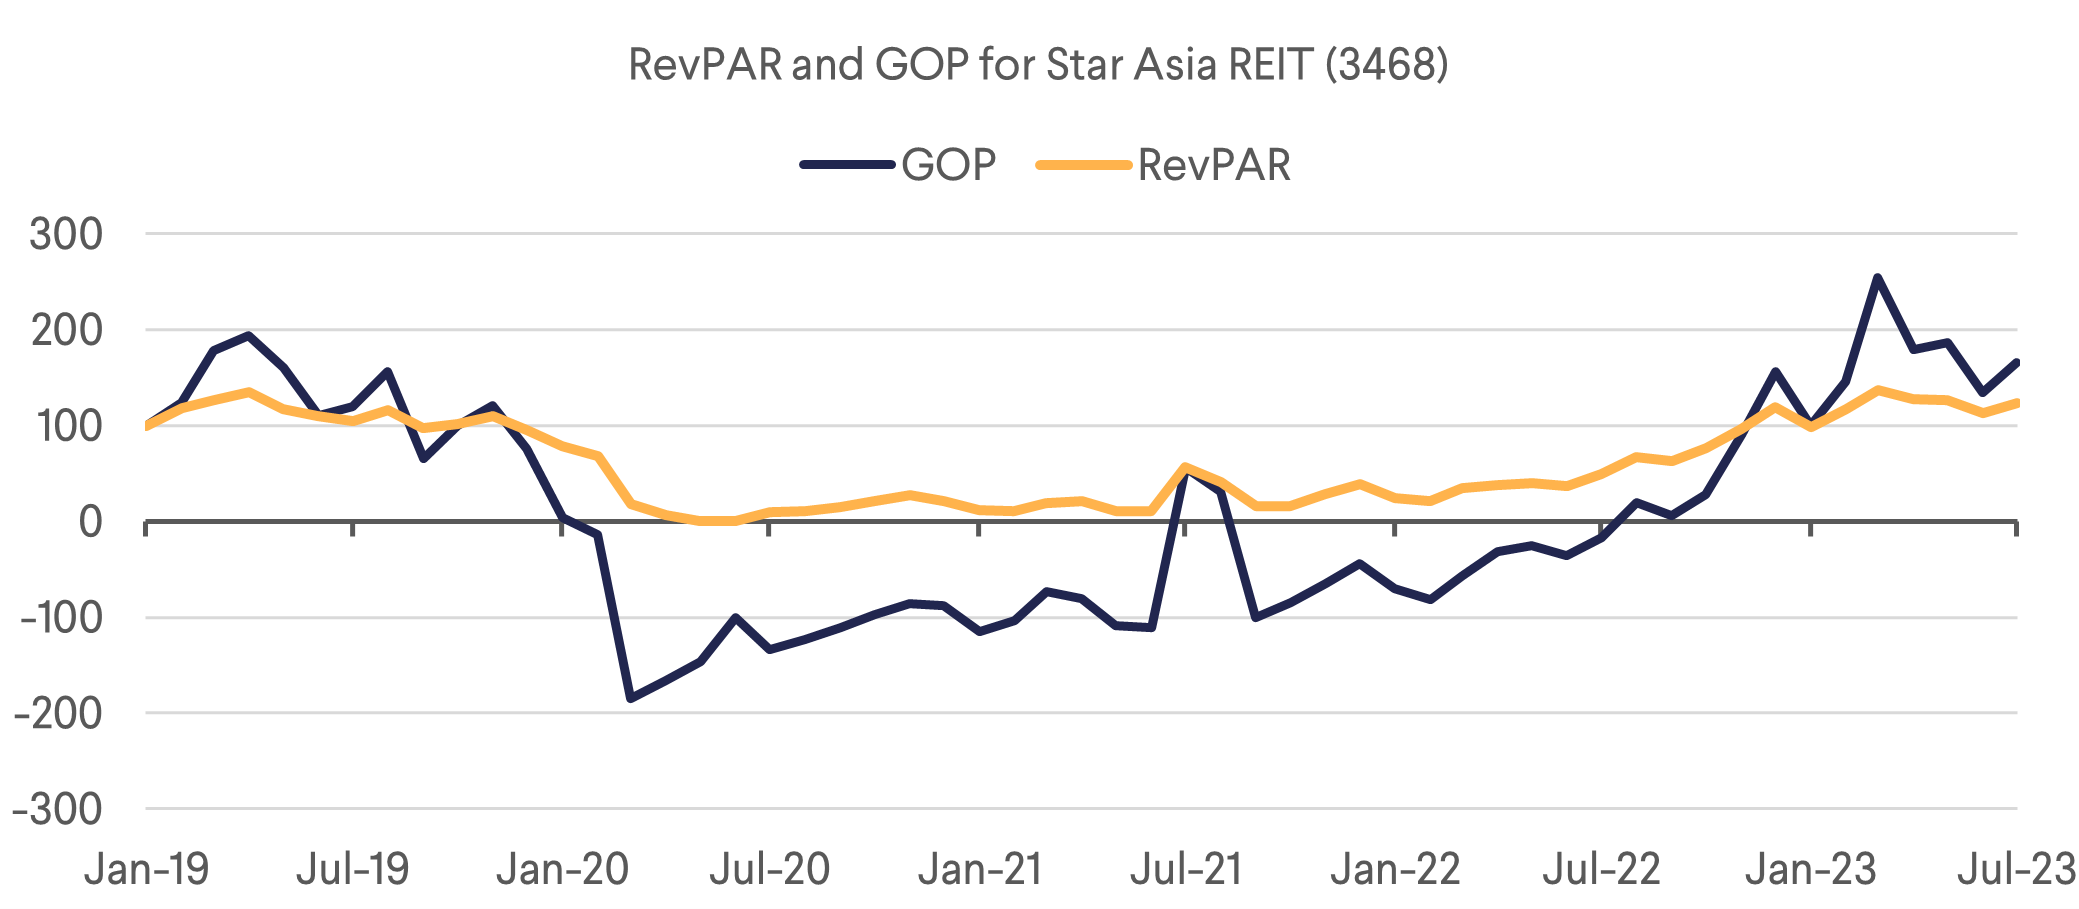 RevPAR and GOP for Star Asia REIT (3468)